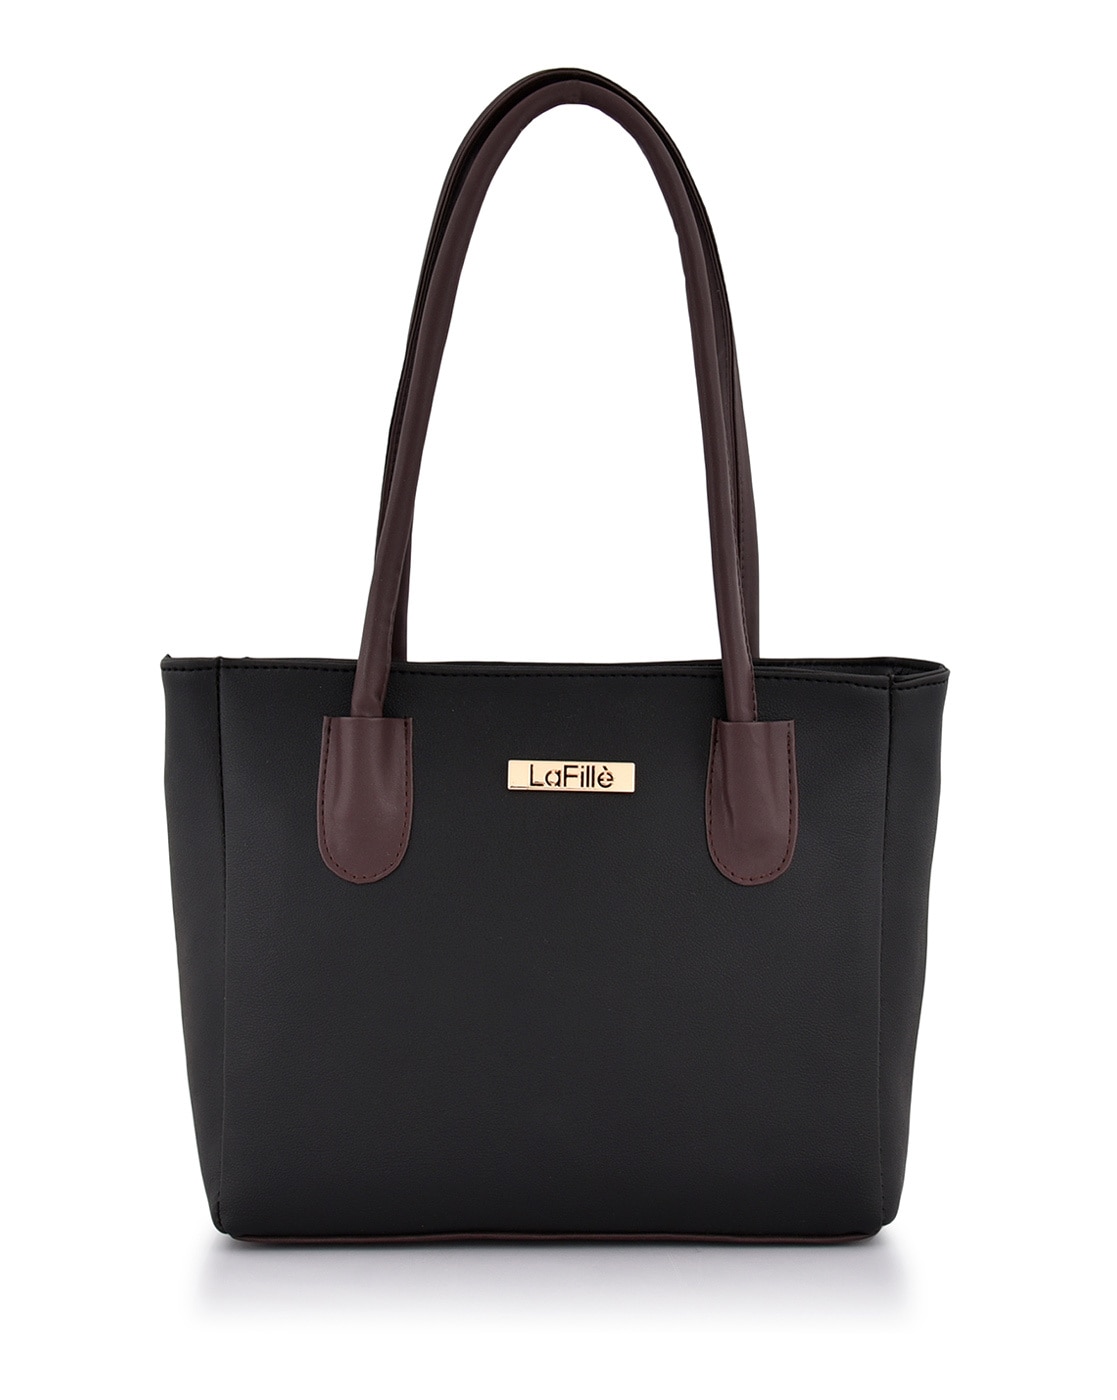 Buy INIT Womens Daisy Ladies Purse Handbag (Black) at Amazon.in